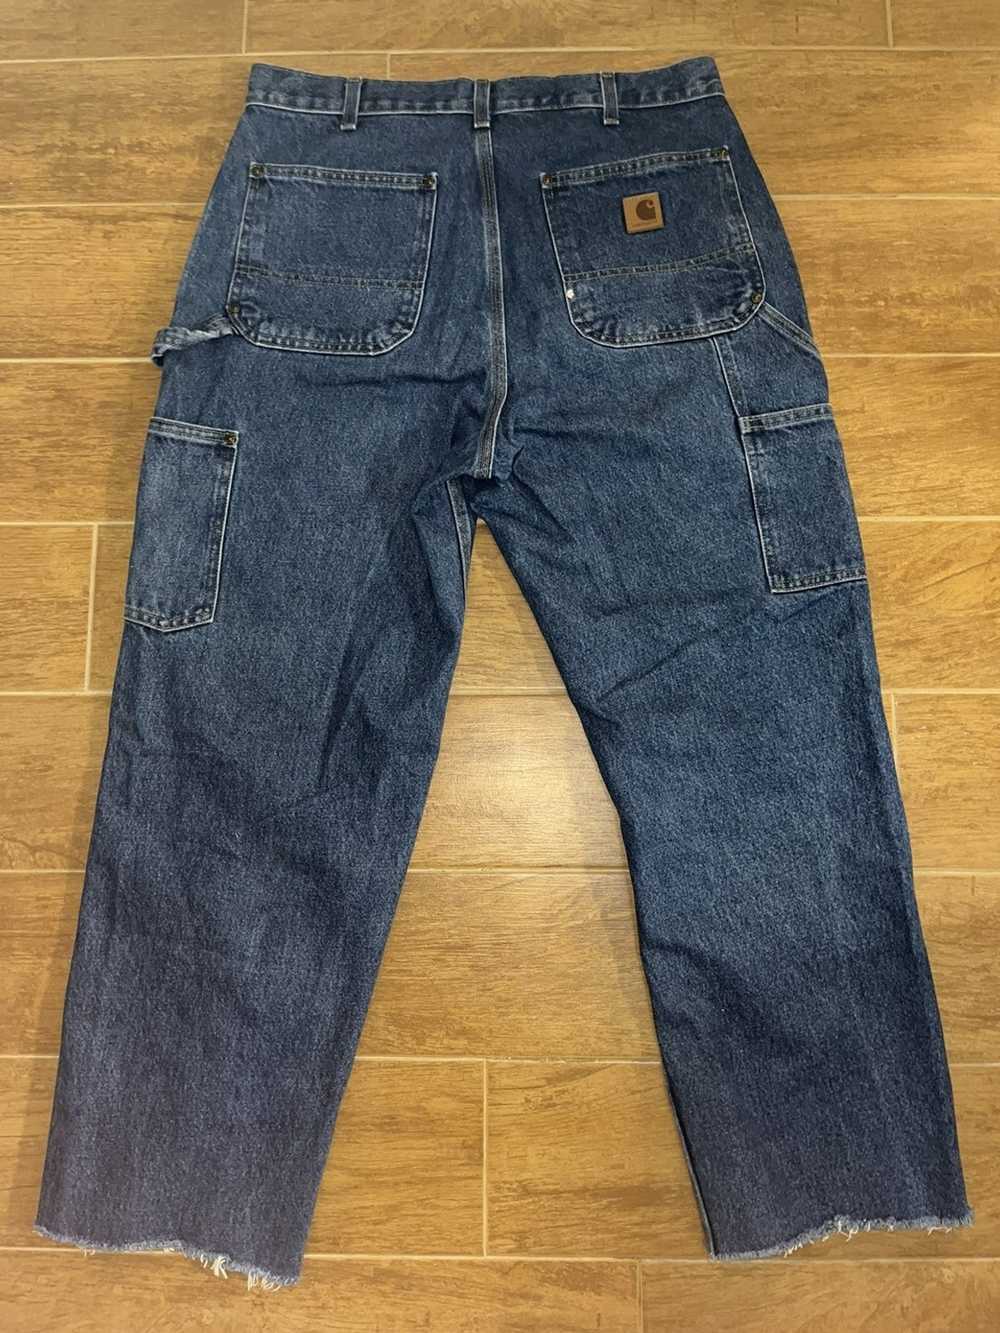 Carhartt Carhartt Double Front Jeans Raw Hem 34x28 - image 5